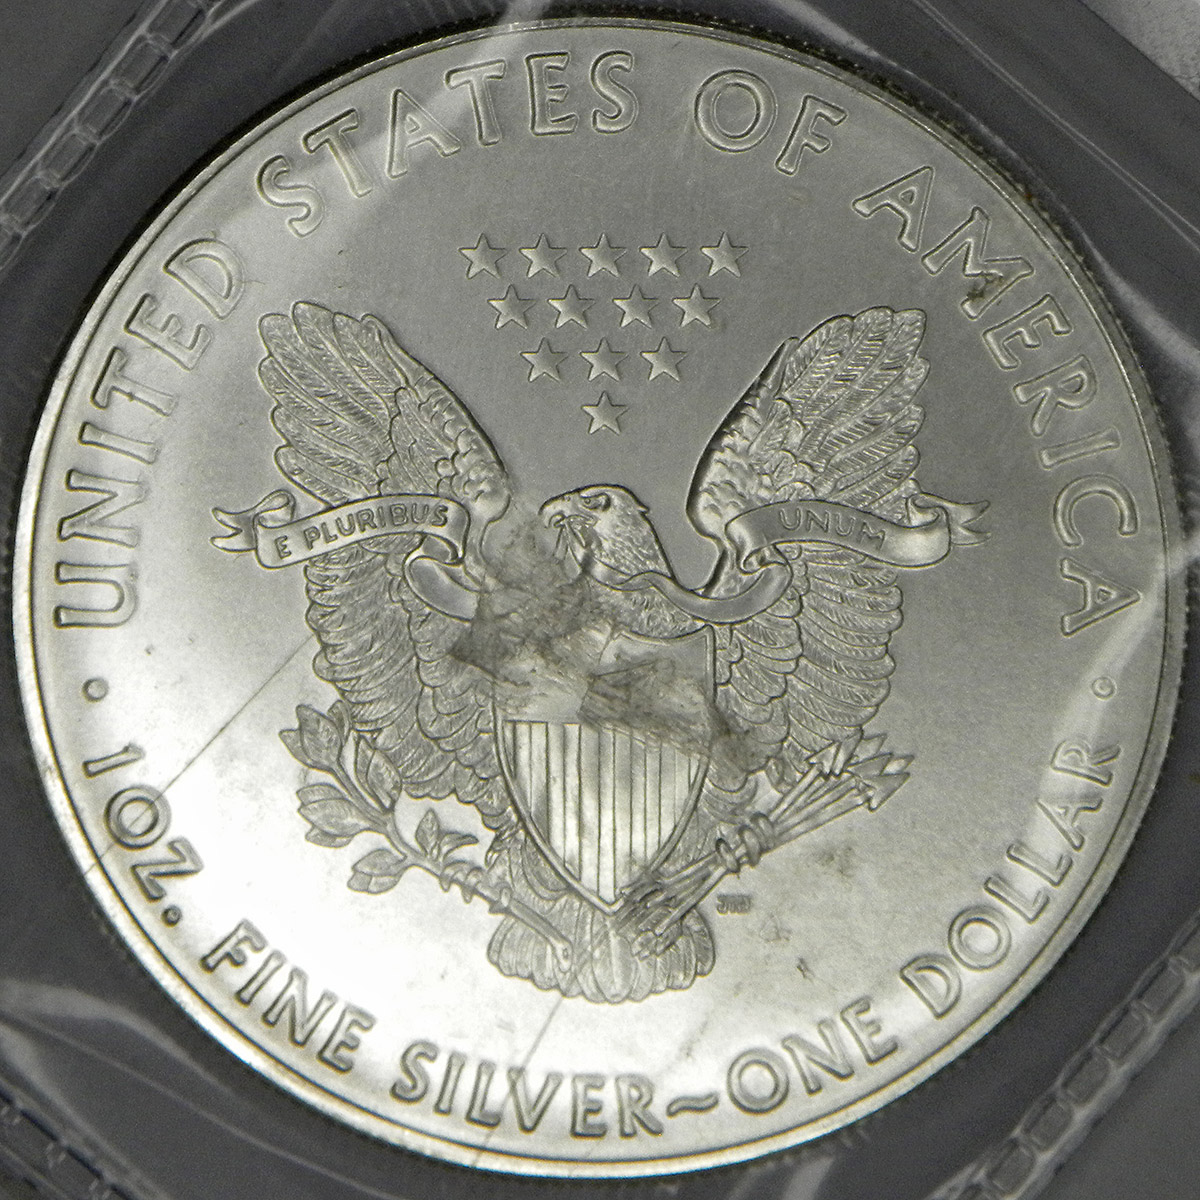 2019 US Silver Eagle (reverse)